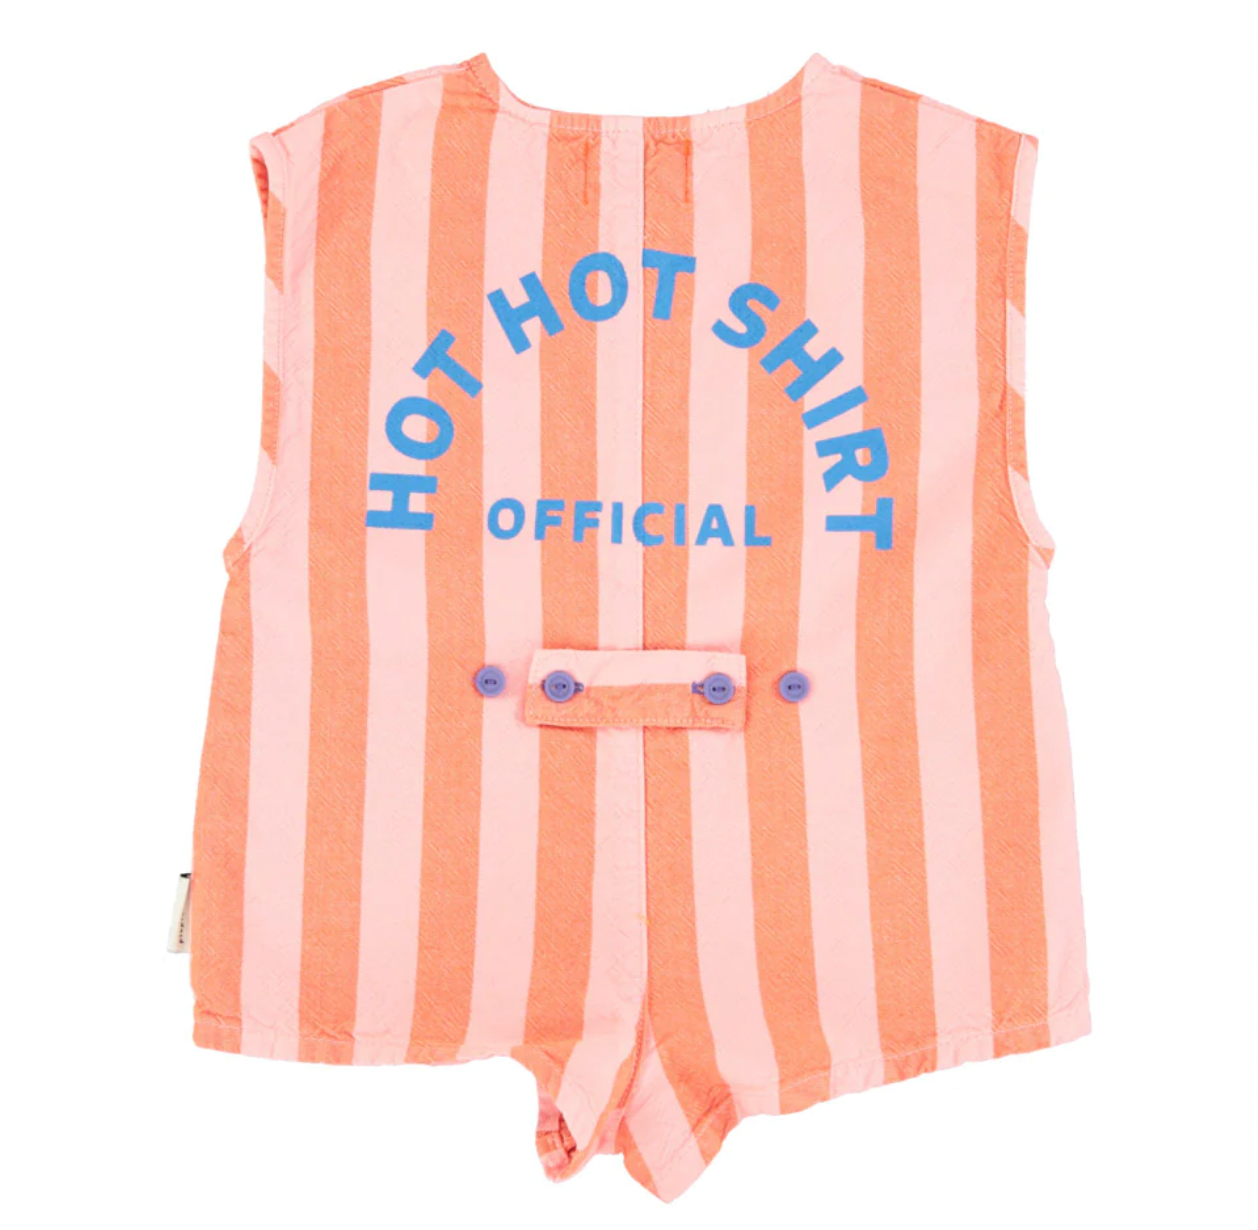 Combinaison "Hot Hot Shirt" courte rayée - orange/rose